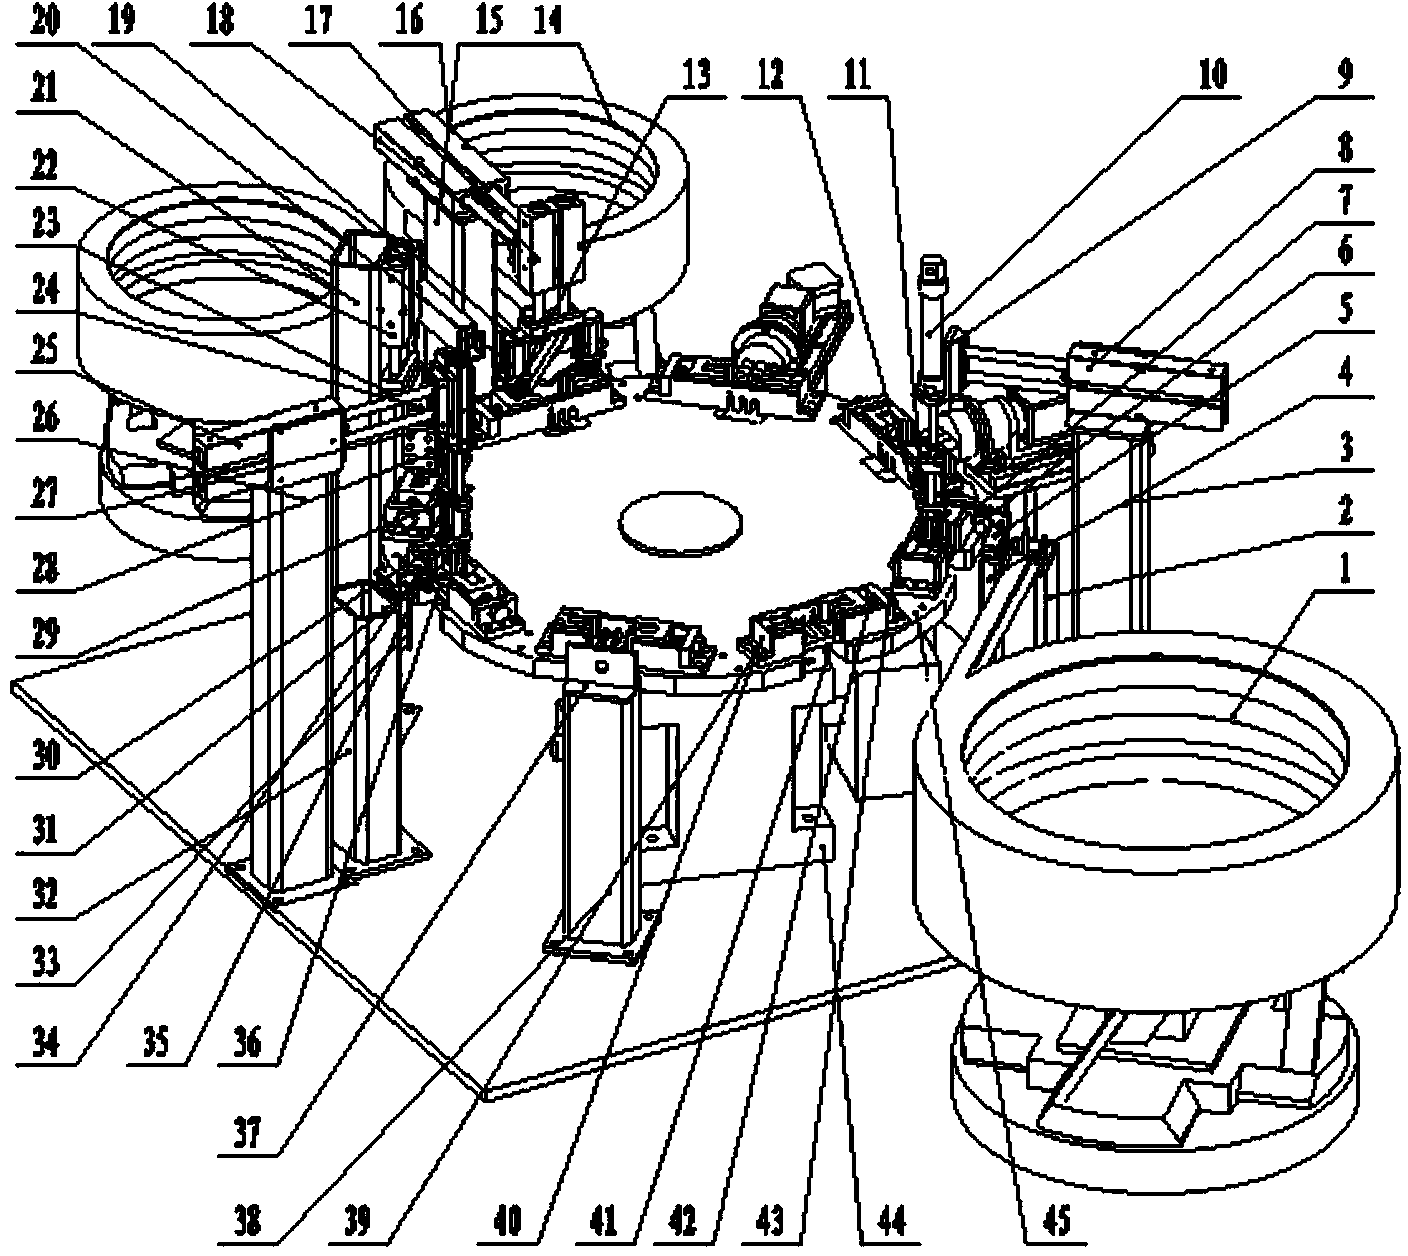 Irregular-shaped radiating fin automatic assembling device